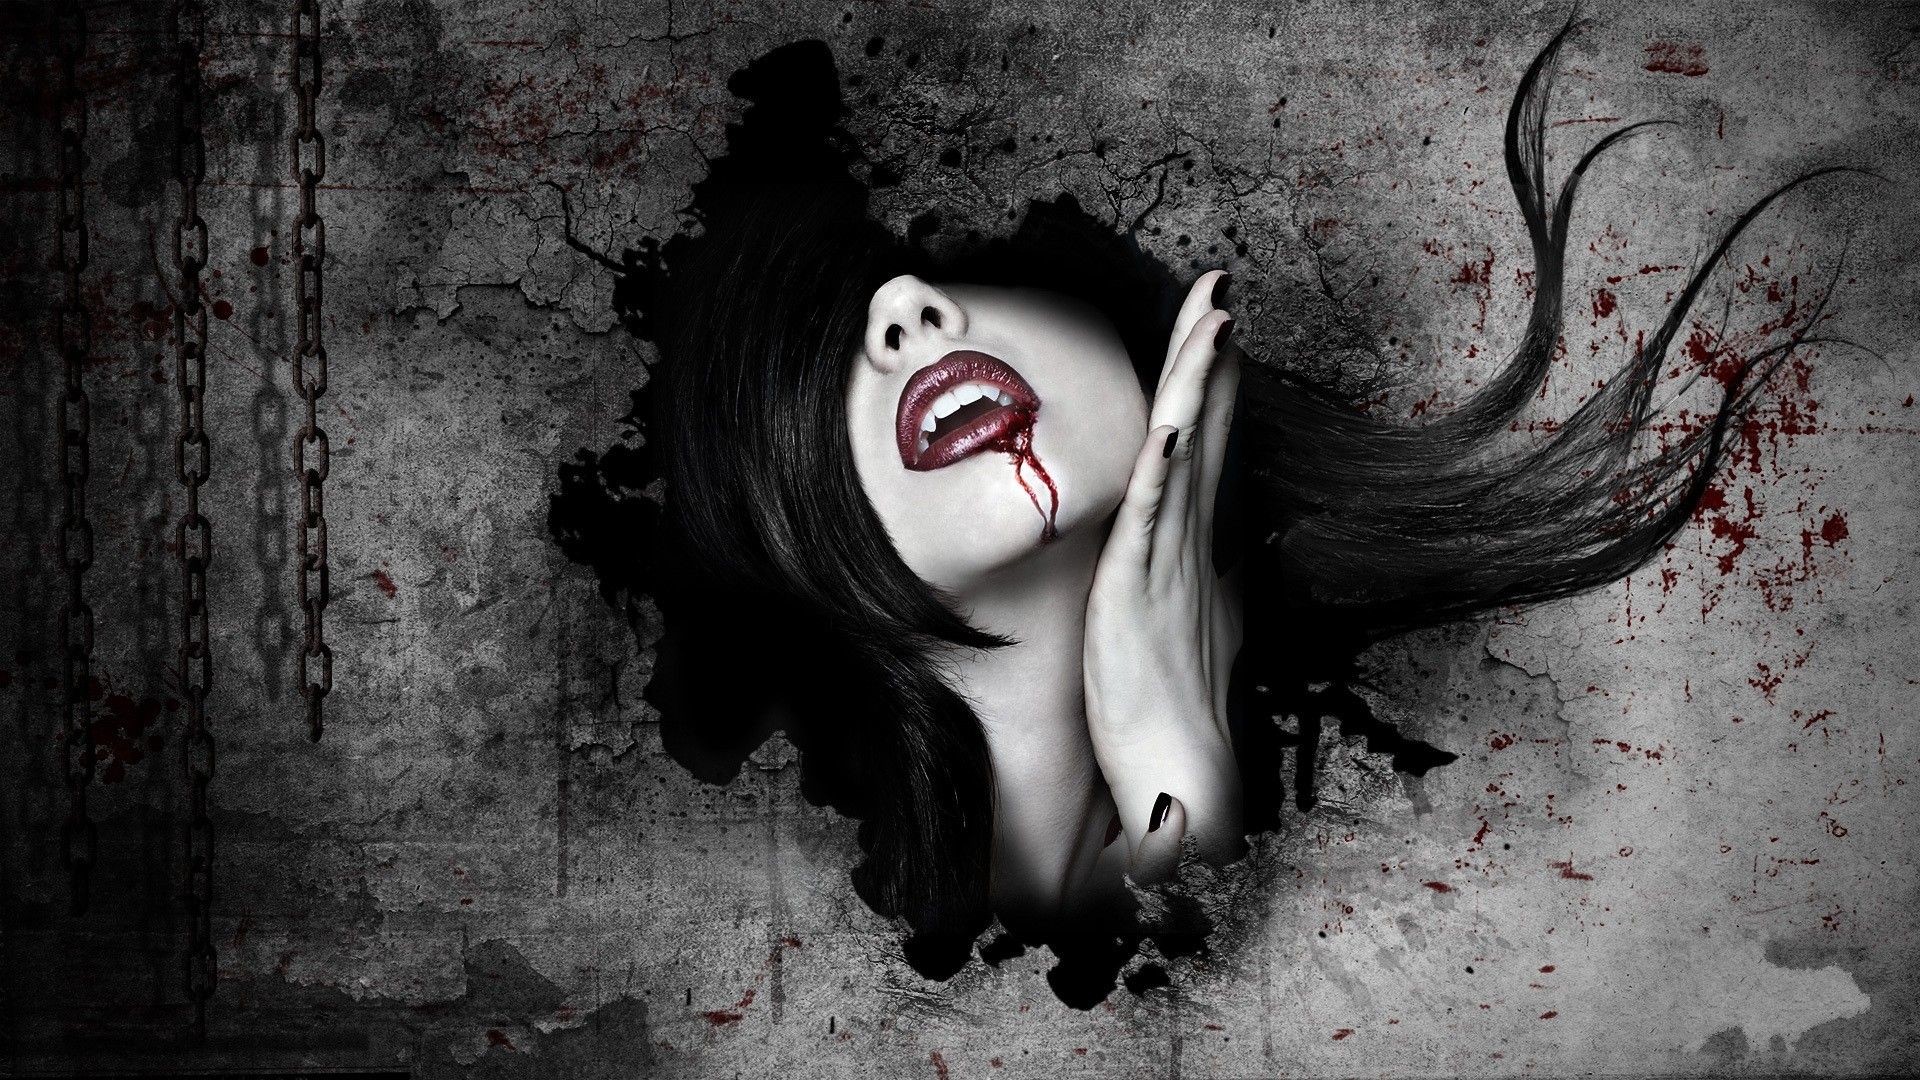 Dark horror fantasy art gothic women vampires blood face wallpaper .